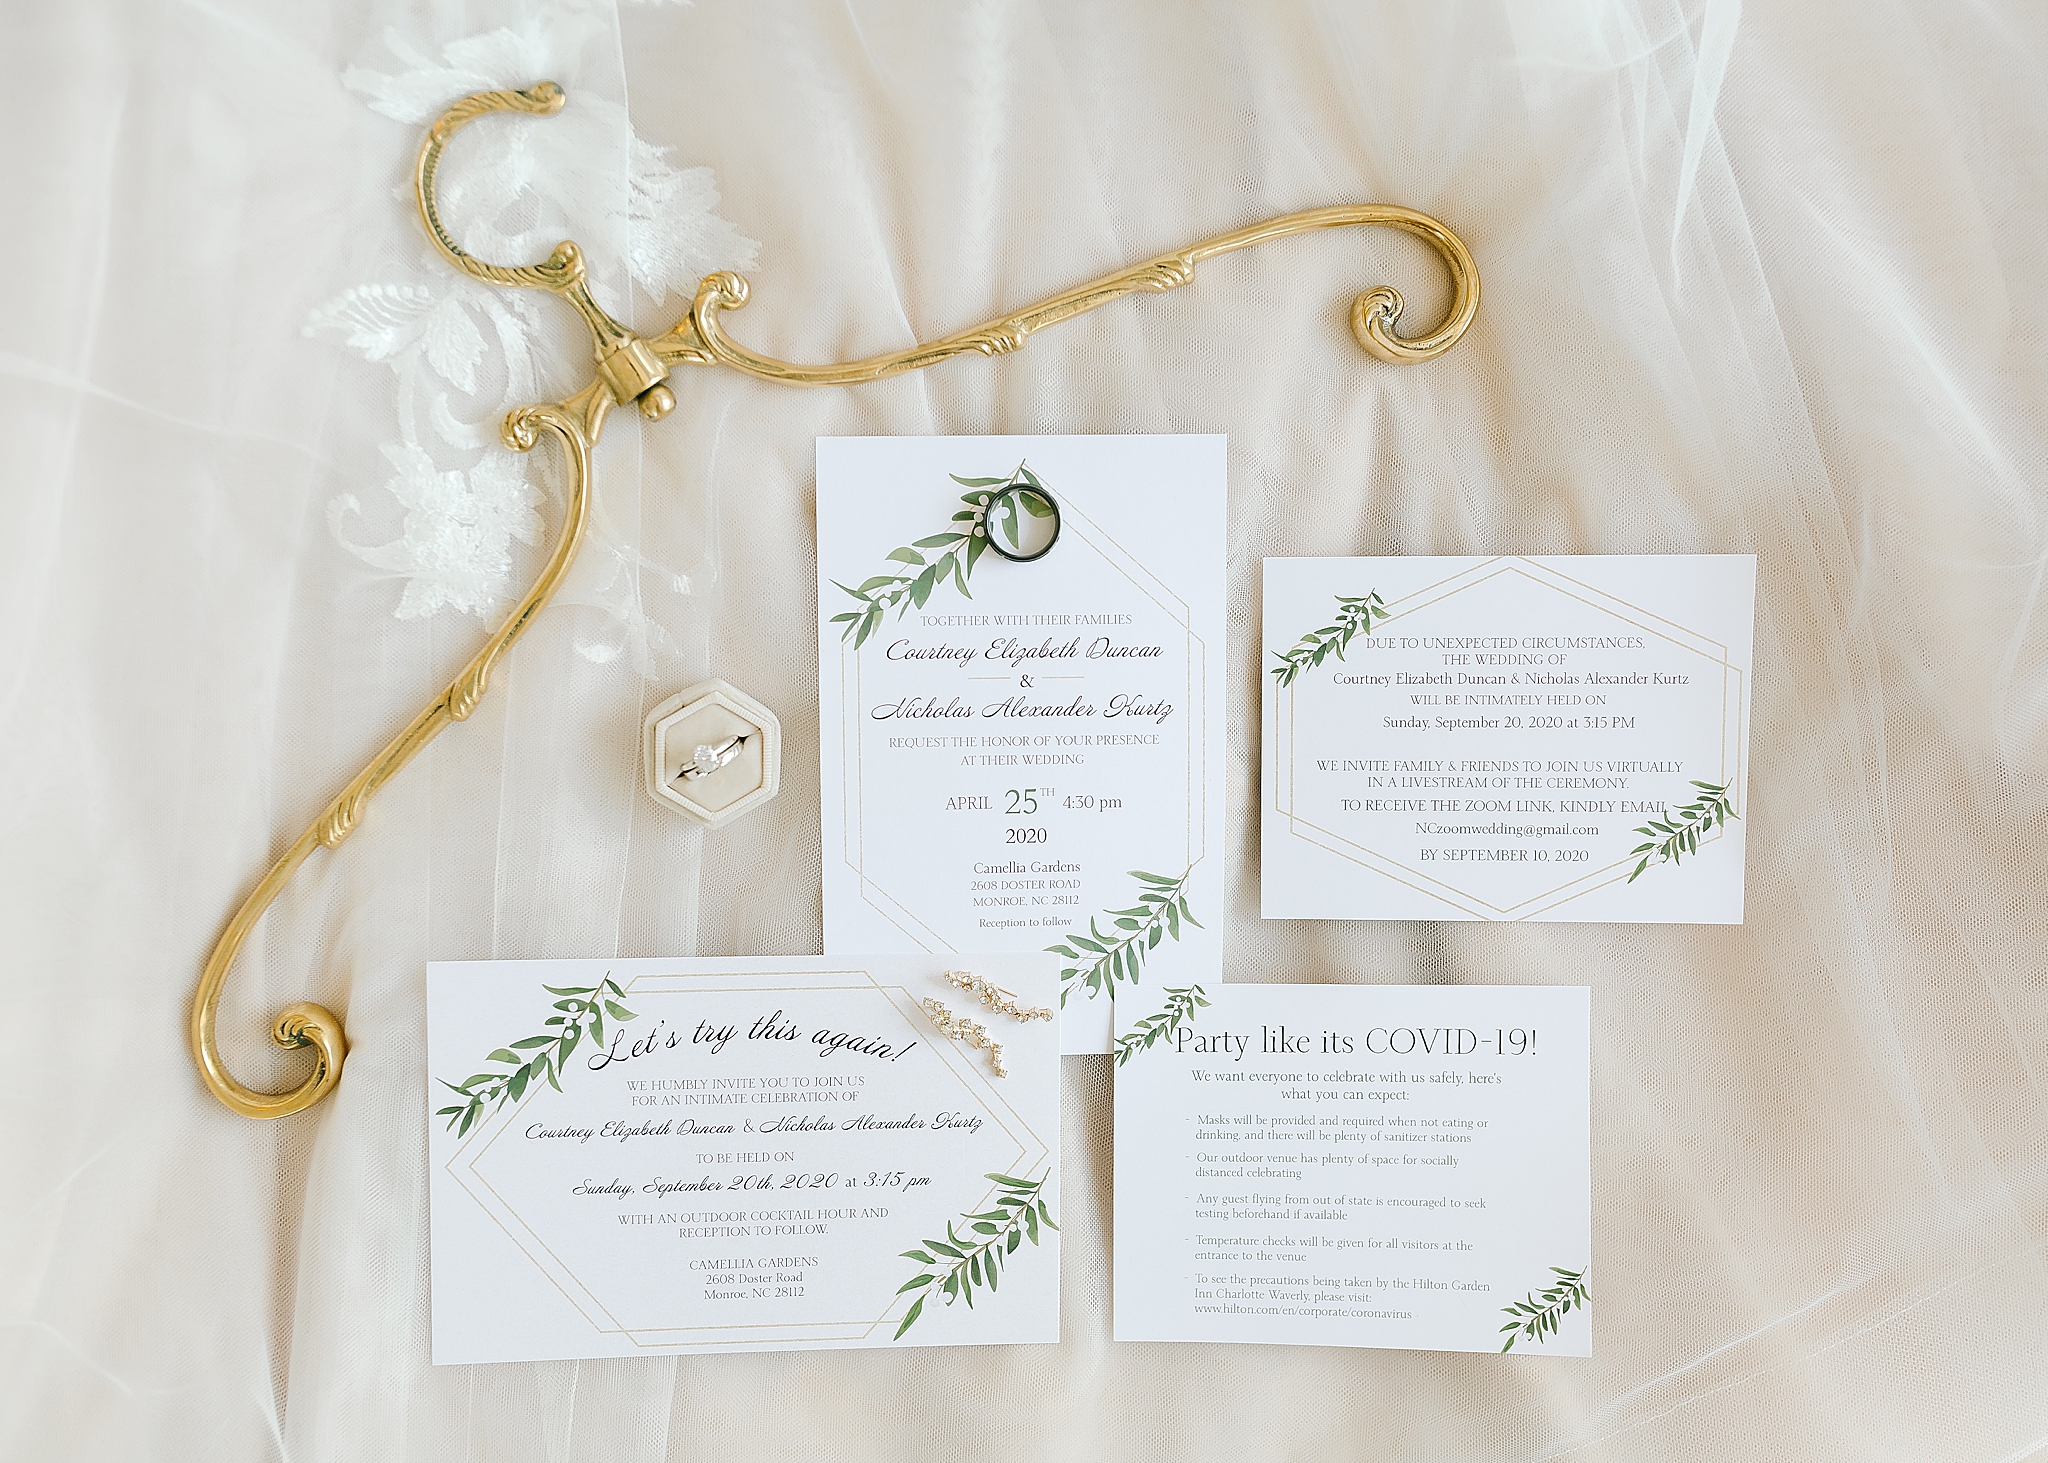 invitation suite for intimate Camellia Gardens wedding